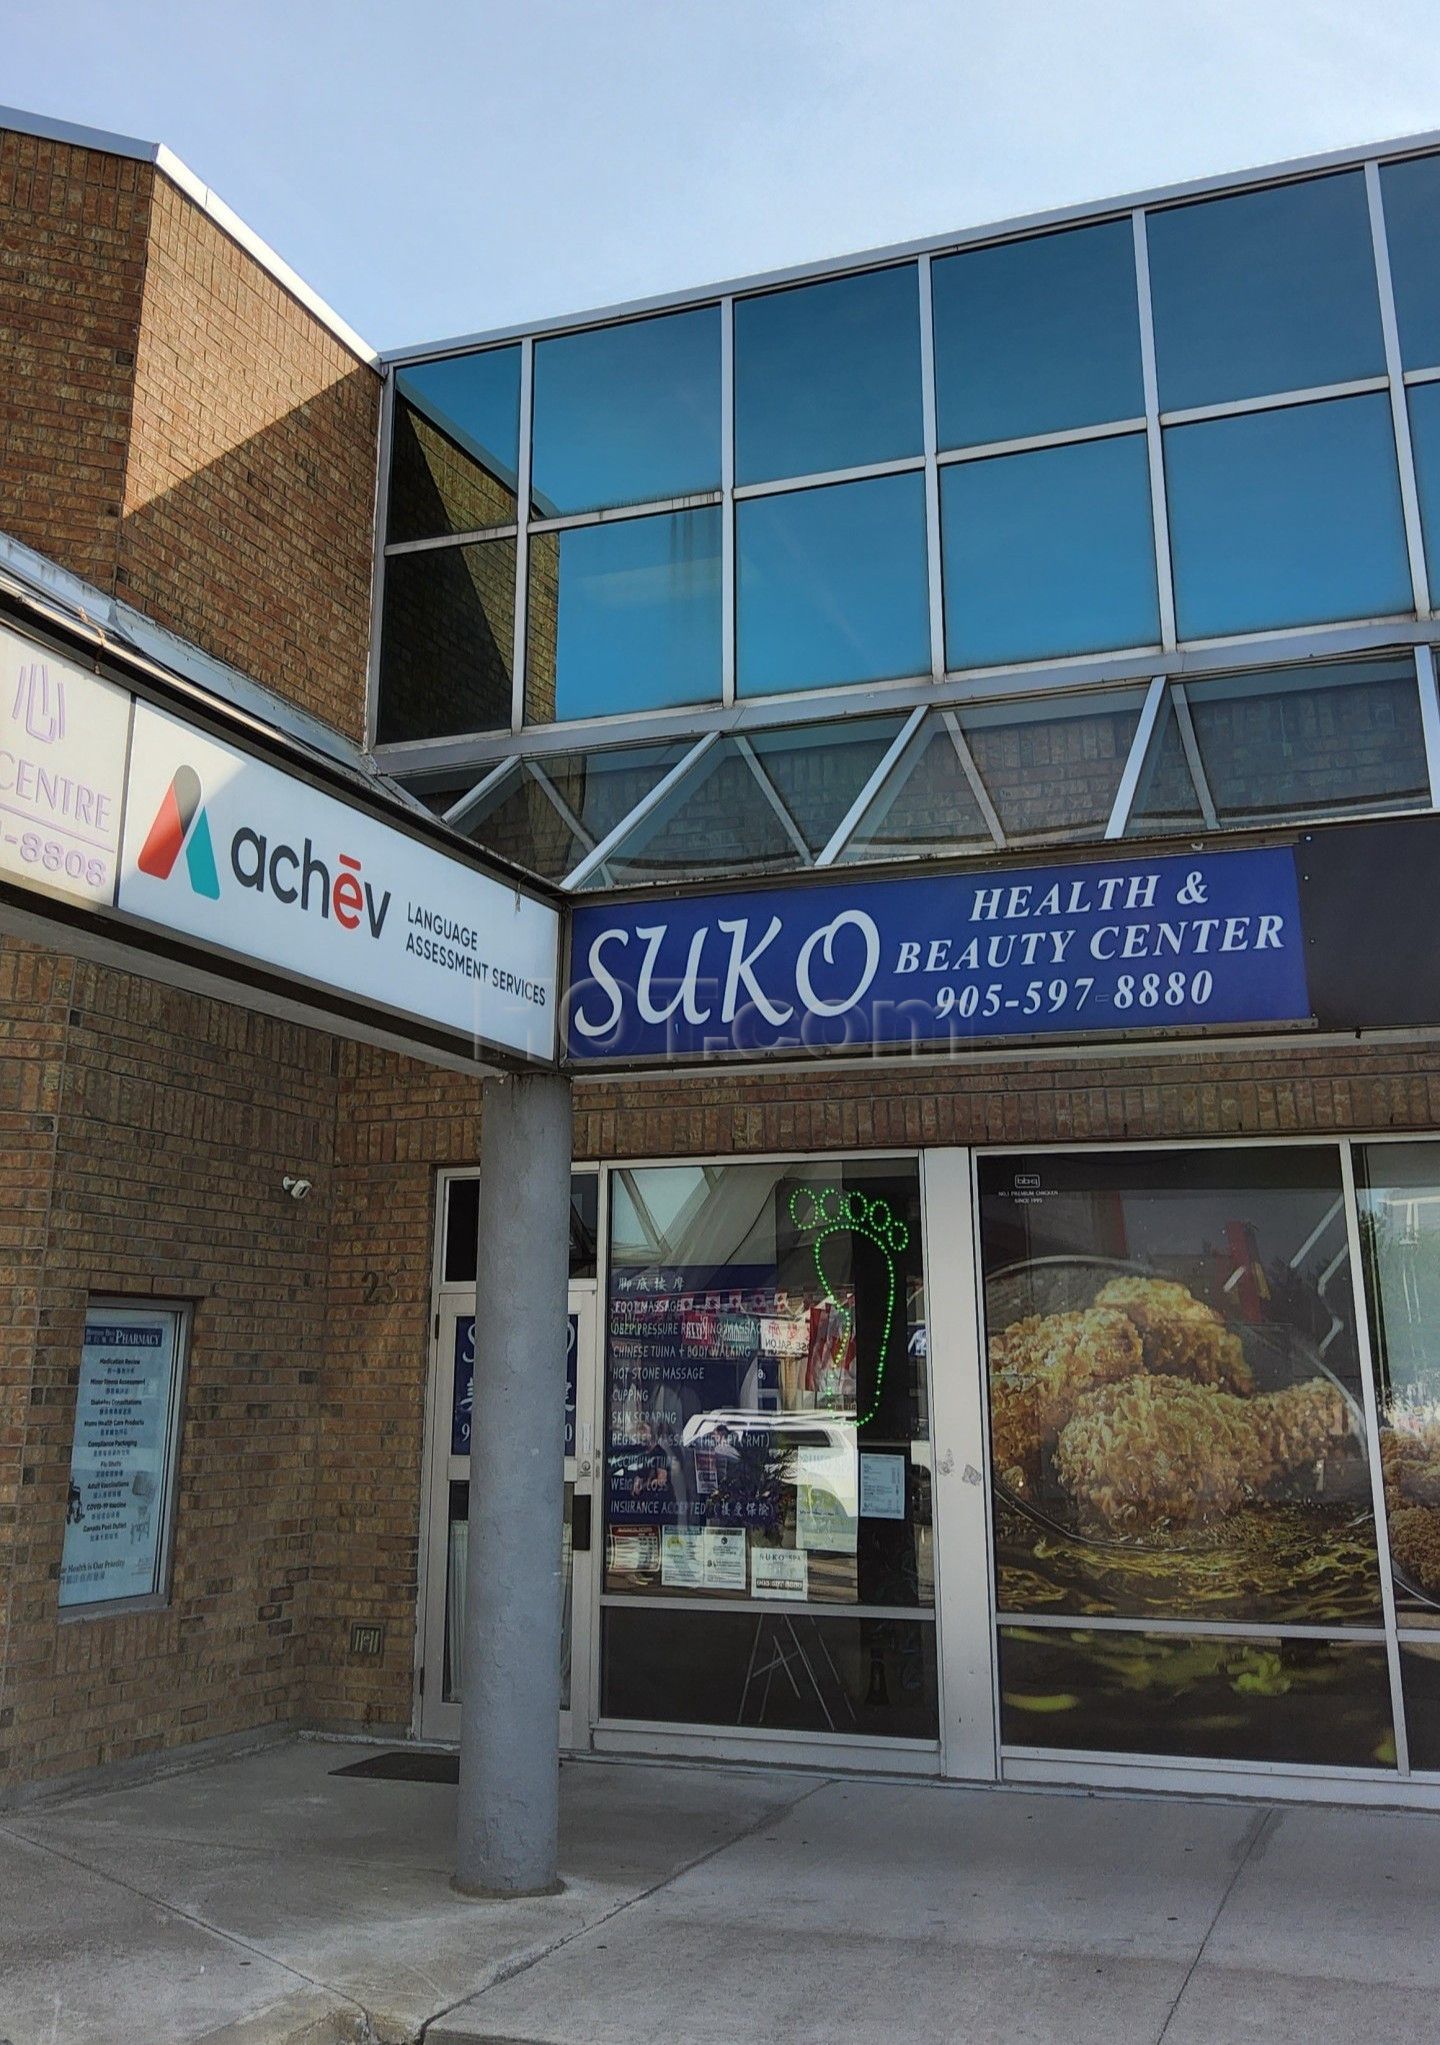 Richmond Hill, Ontario Suko Health & Beauty Center